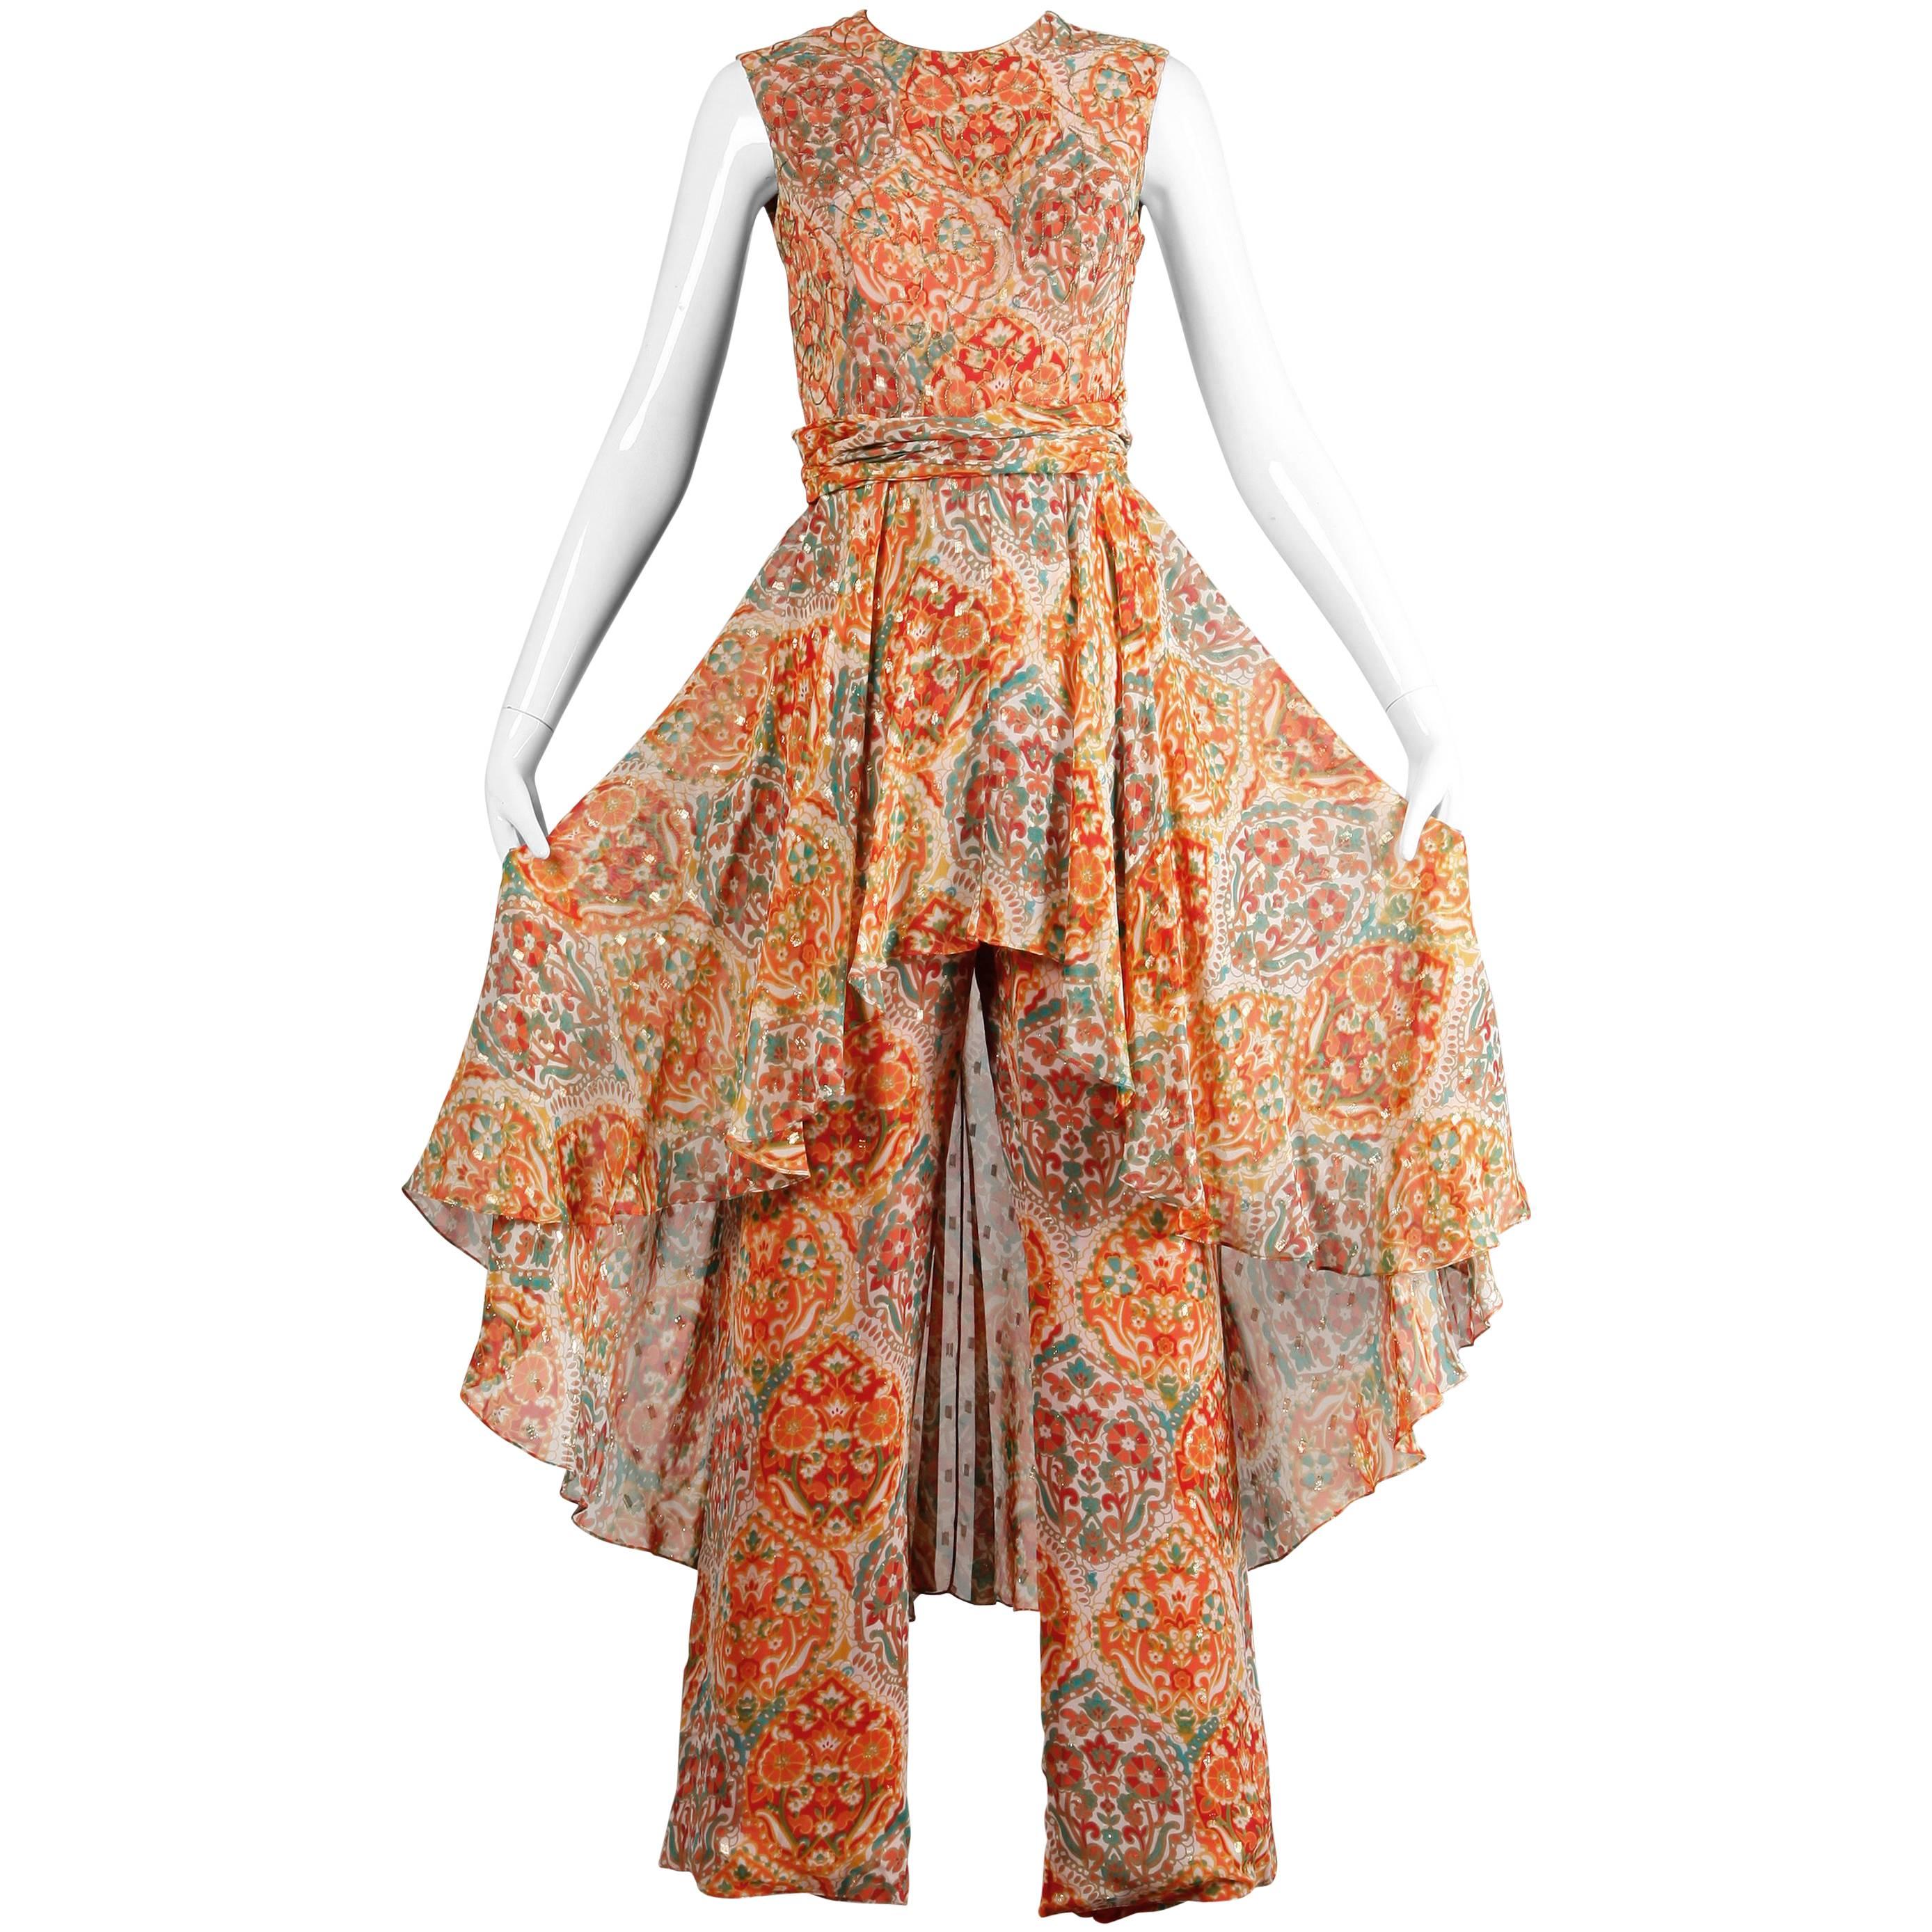 Oscar de la Renta 1960s Vintage Metallic Paisley Print Jumpsuit Dress with Skirt